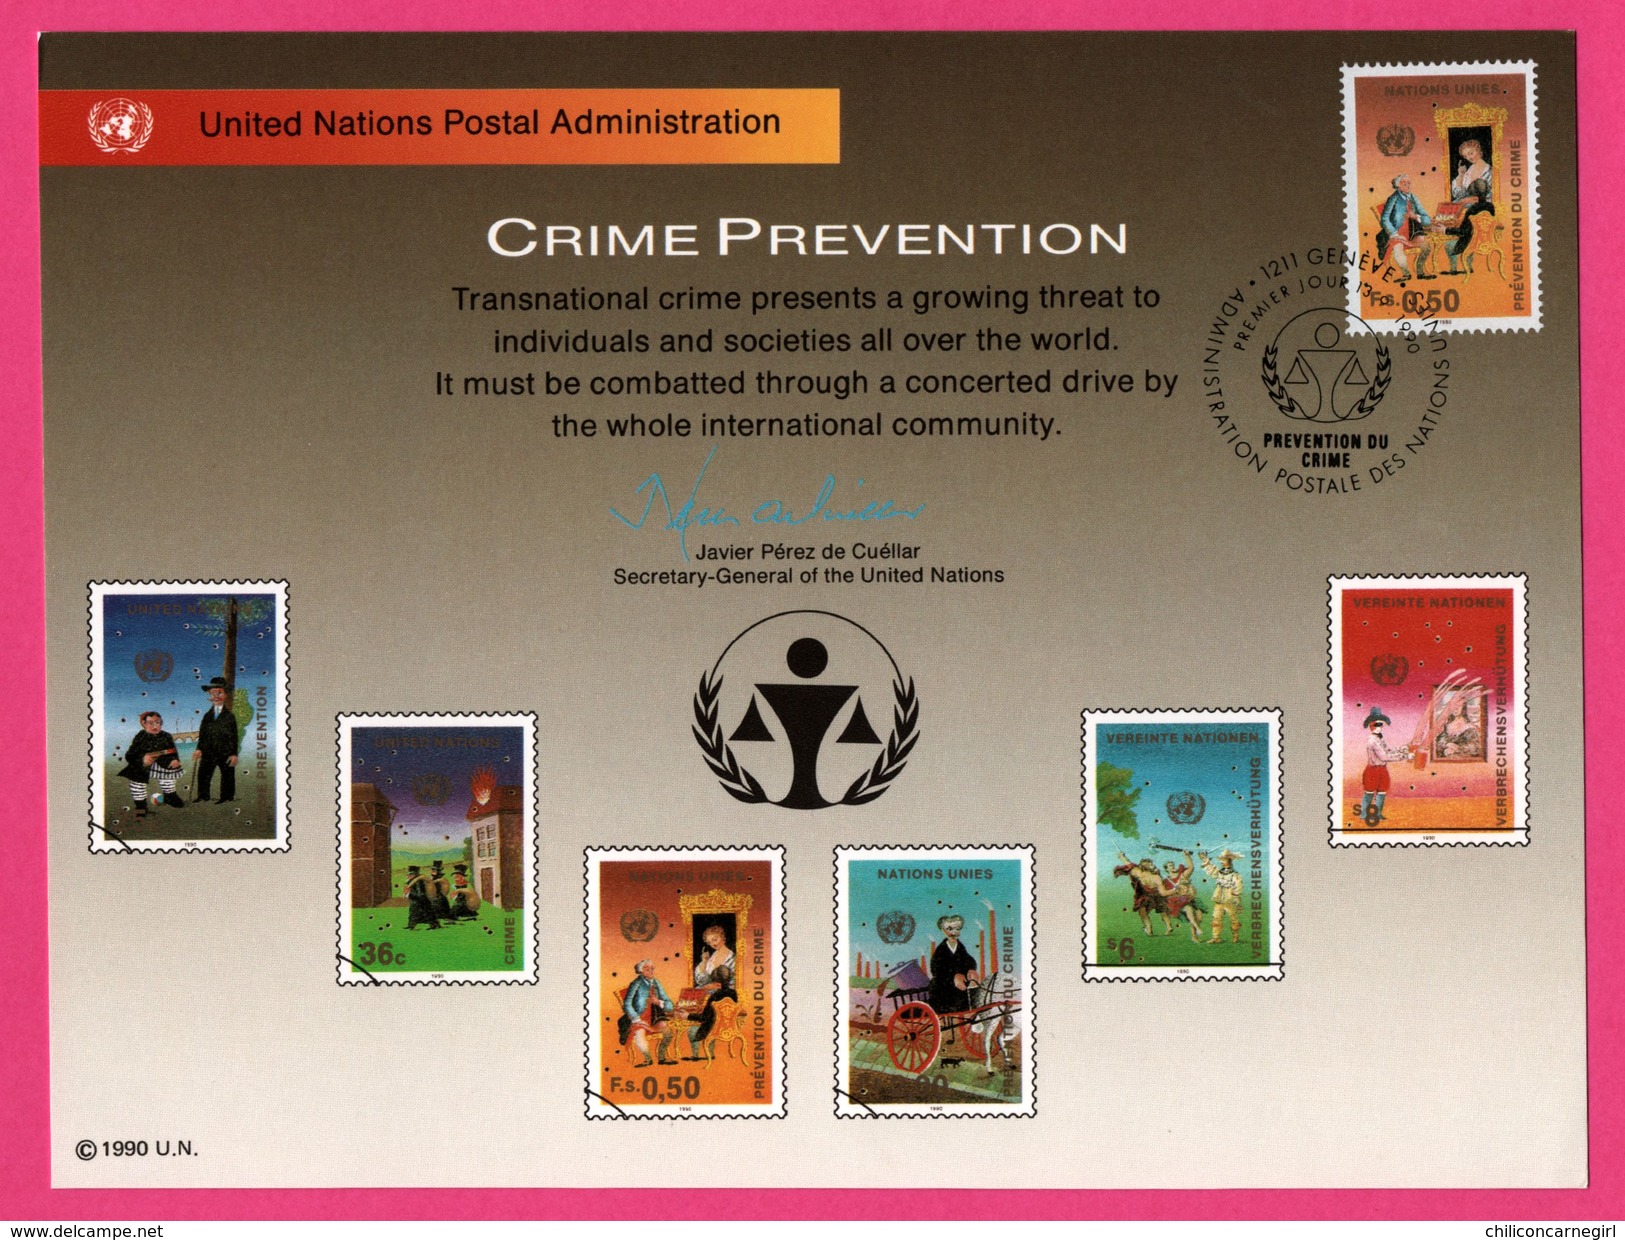 3 Encarts - FDC - United Nations P. A. - Crime Prevention - JAVIER PEREZ - Wien New York Genève 1990 - APNU - Gemeinschaftsausgaben New York/Genf/Wien